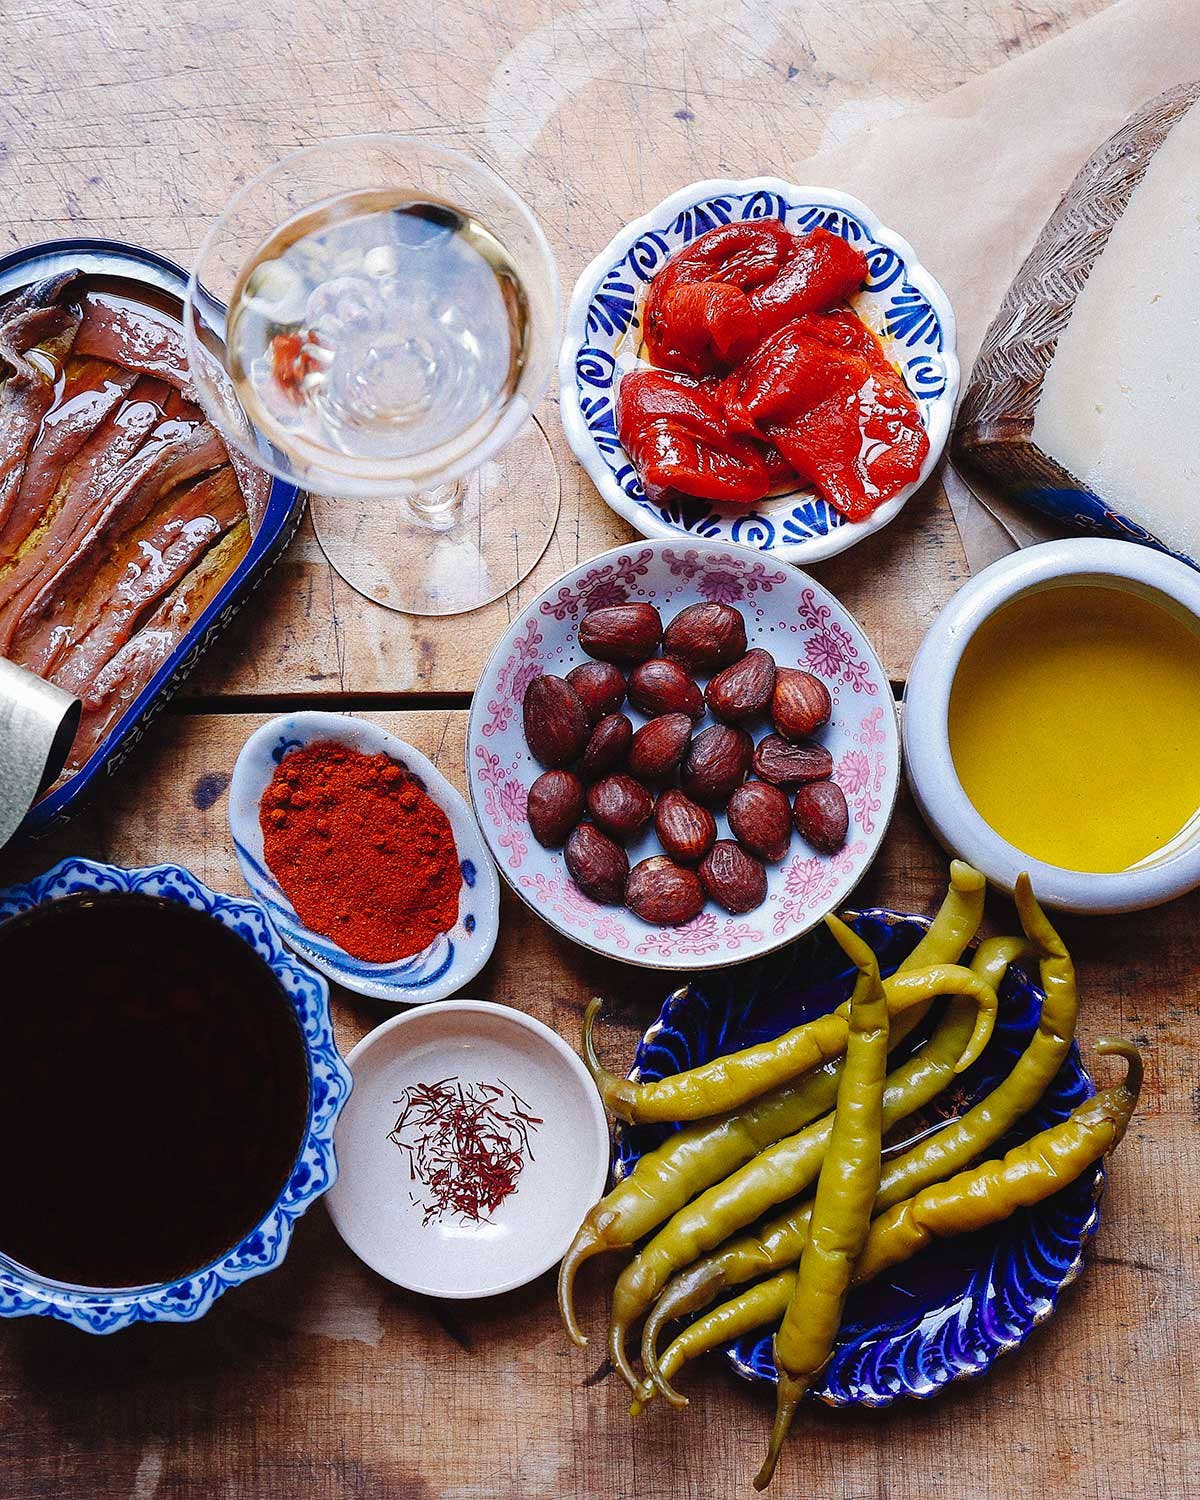 Traditional Spanish ingredients